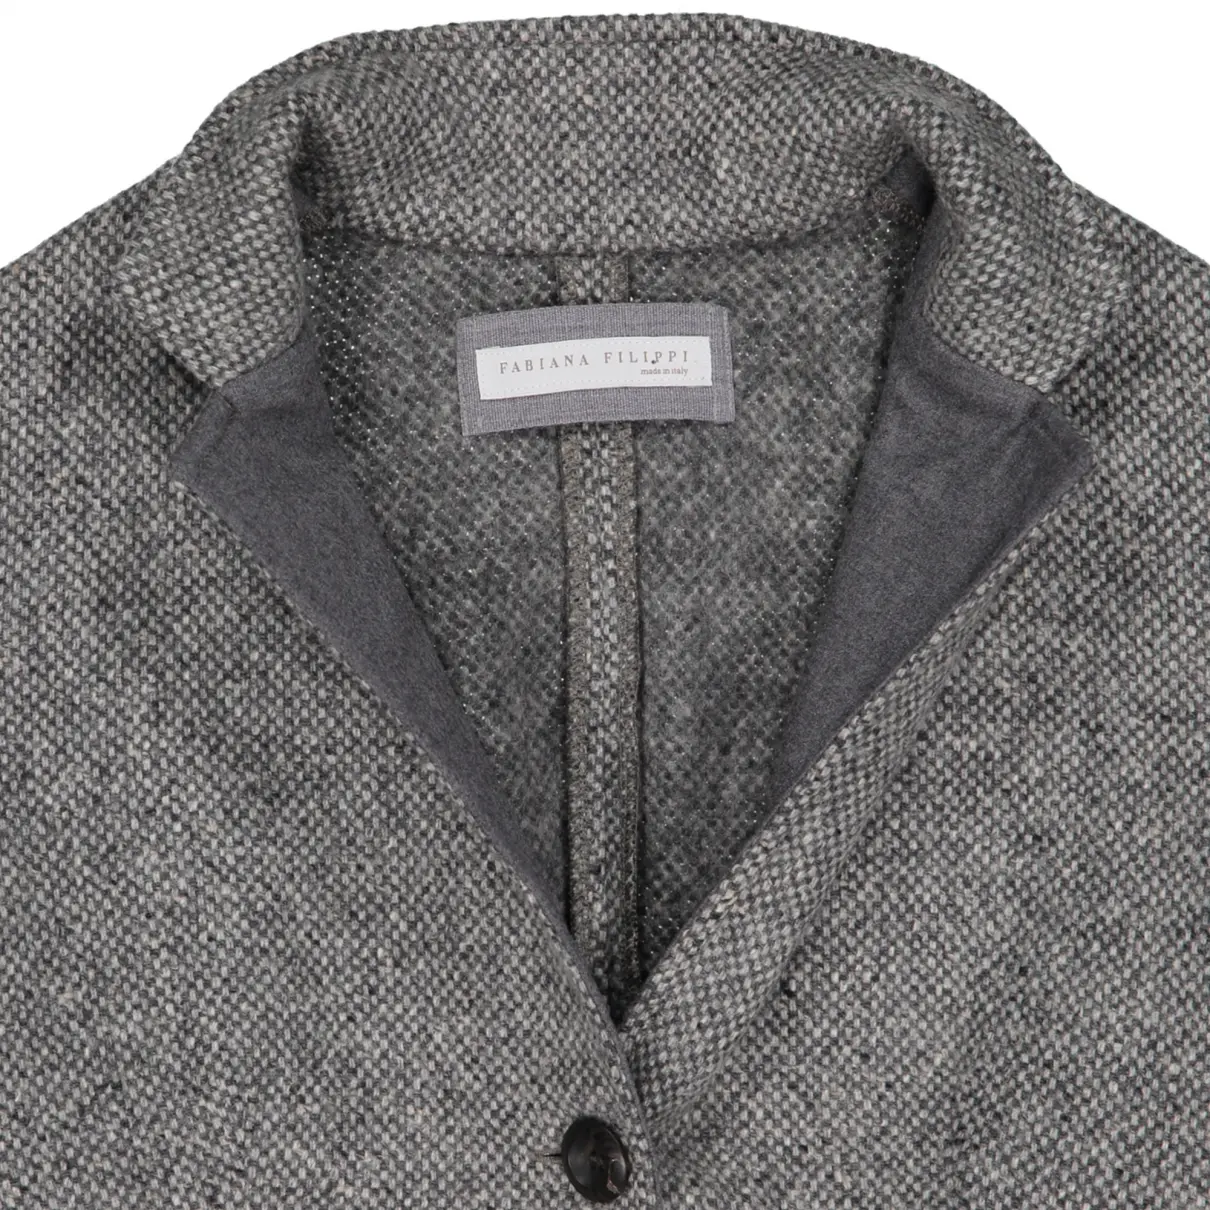 Buy Fabiana Filippi Wool jacket online